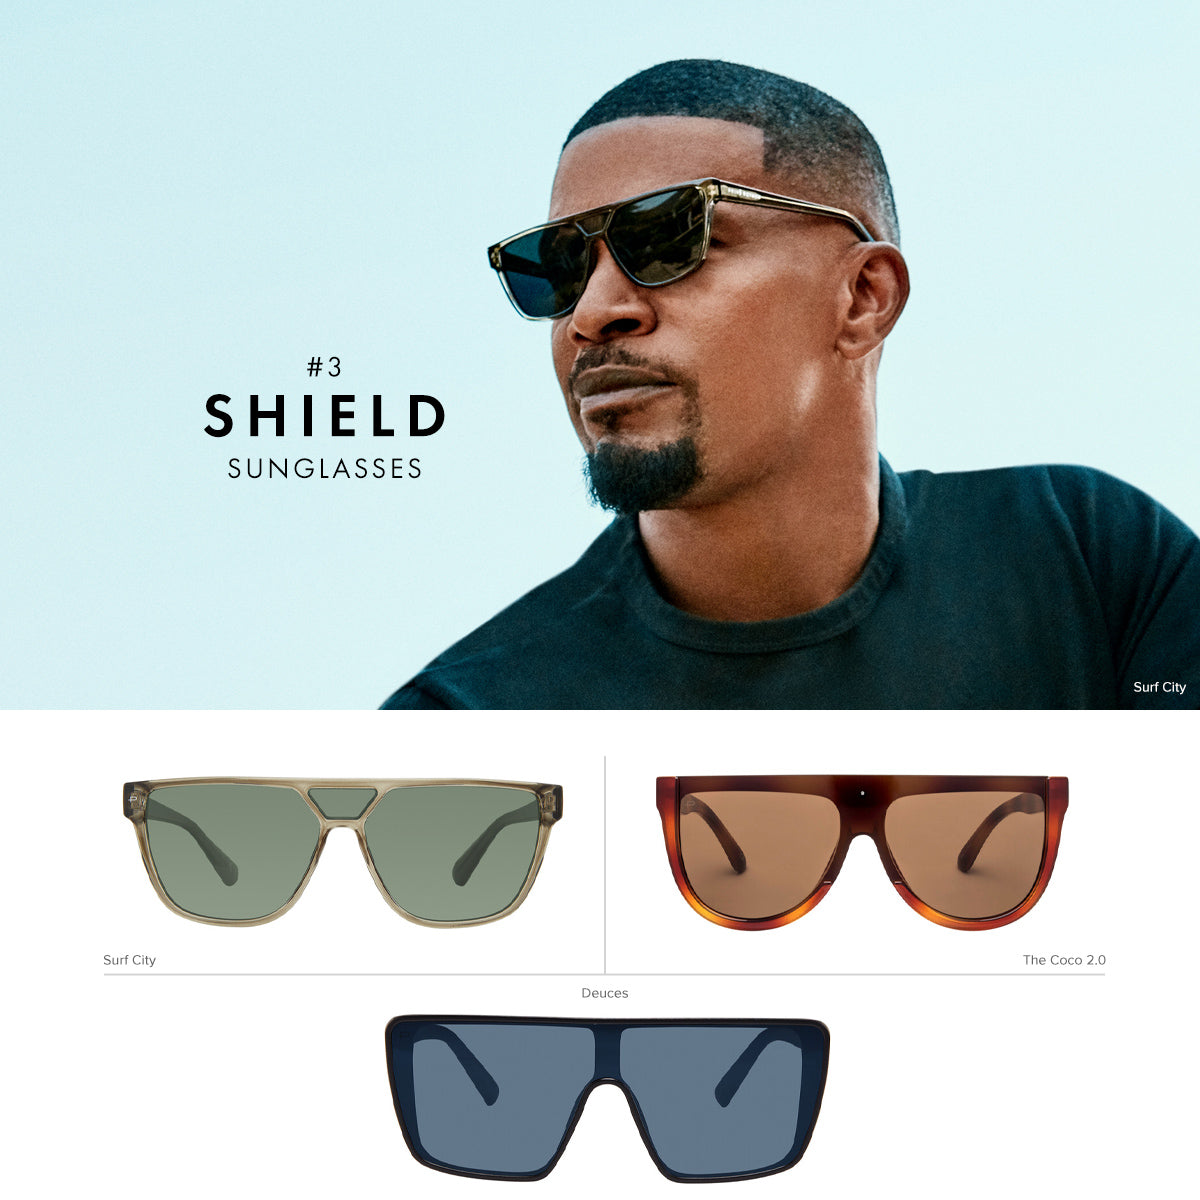 Buy Black Sunglasses for Men by Eyewearlabs Online | Ajio.com